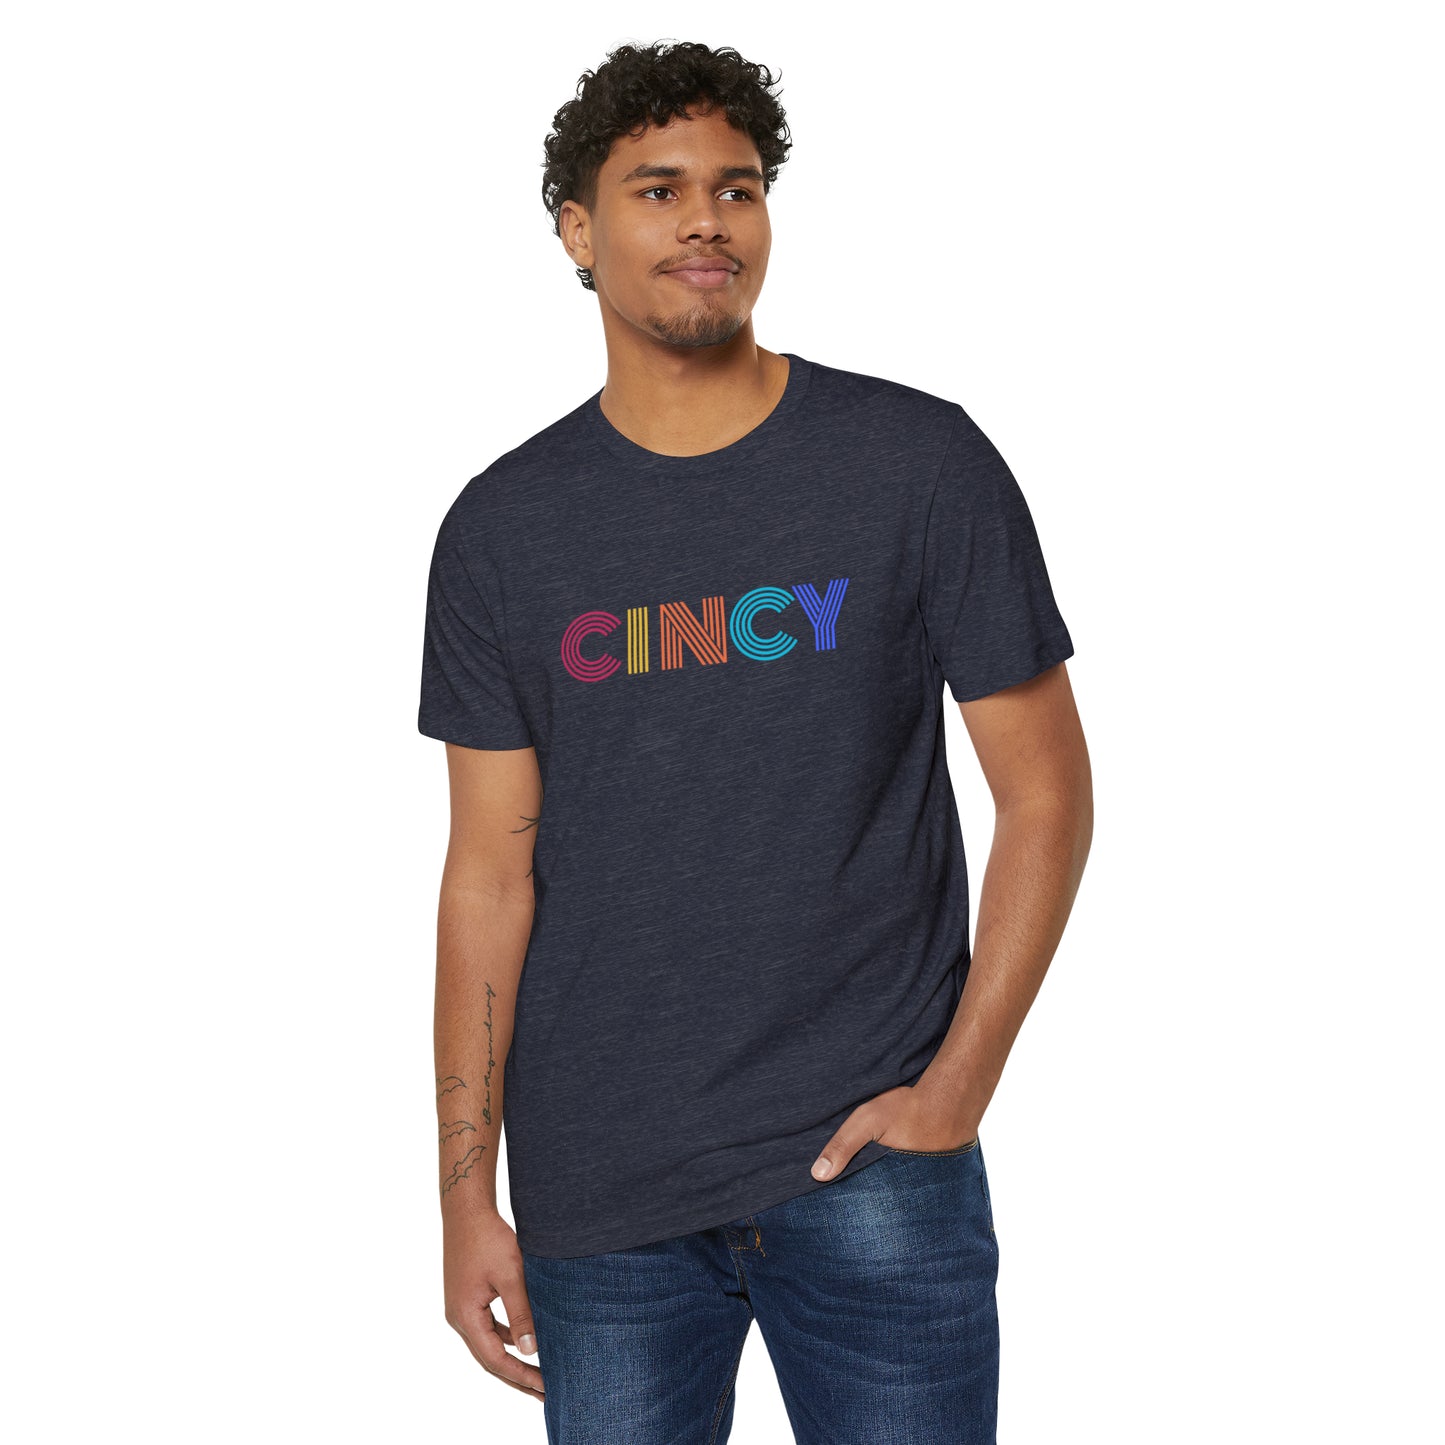 CINCY Unisex Recycled Organic T-Shirt